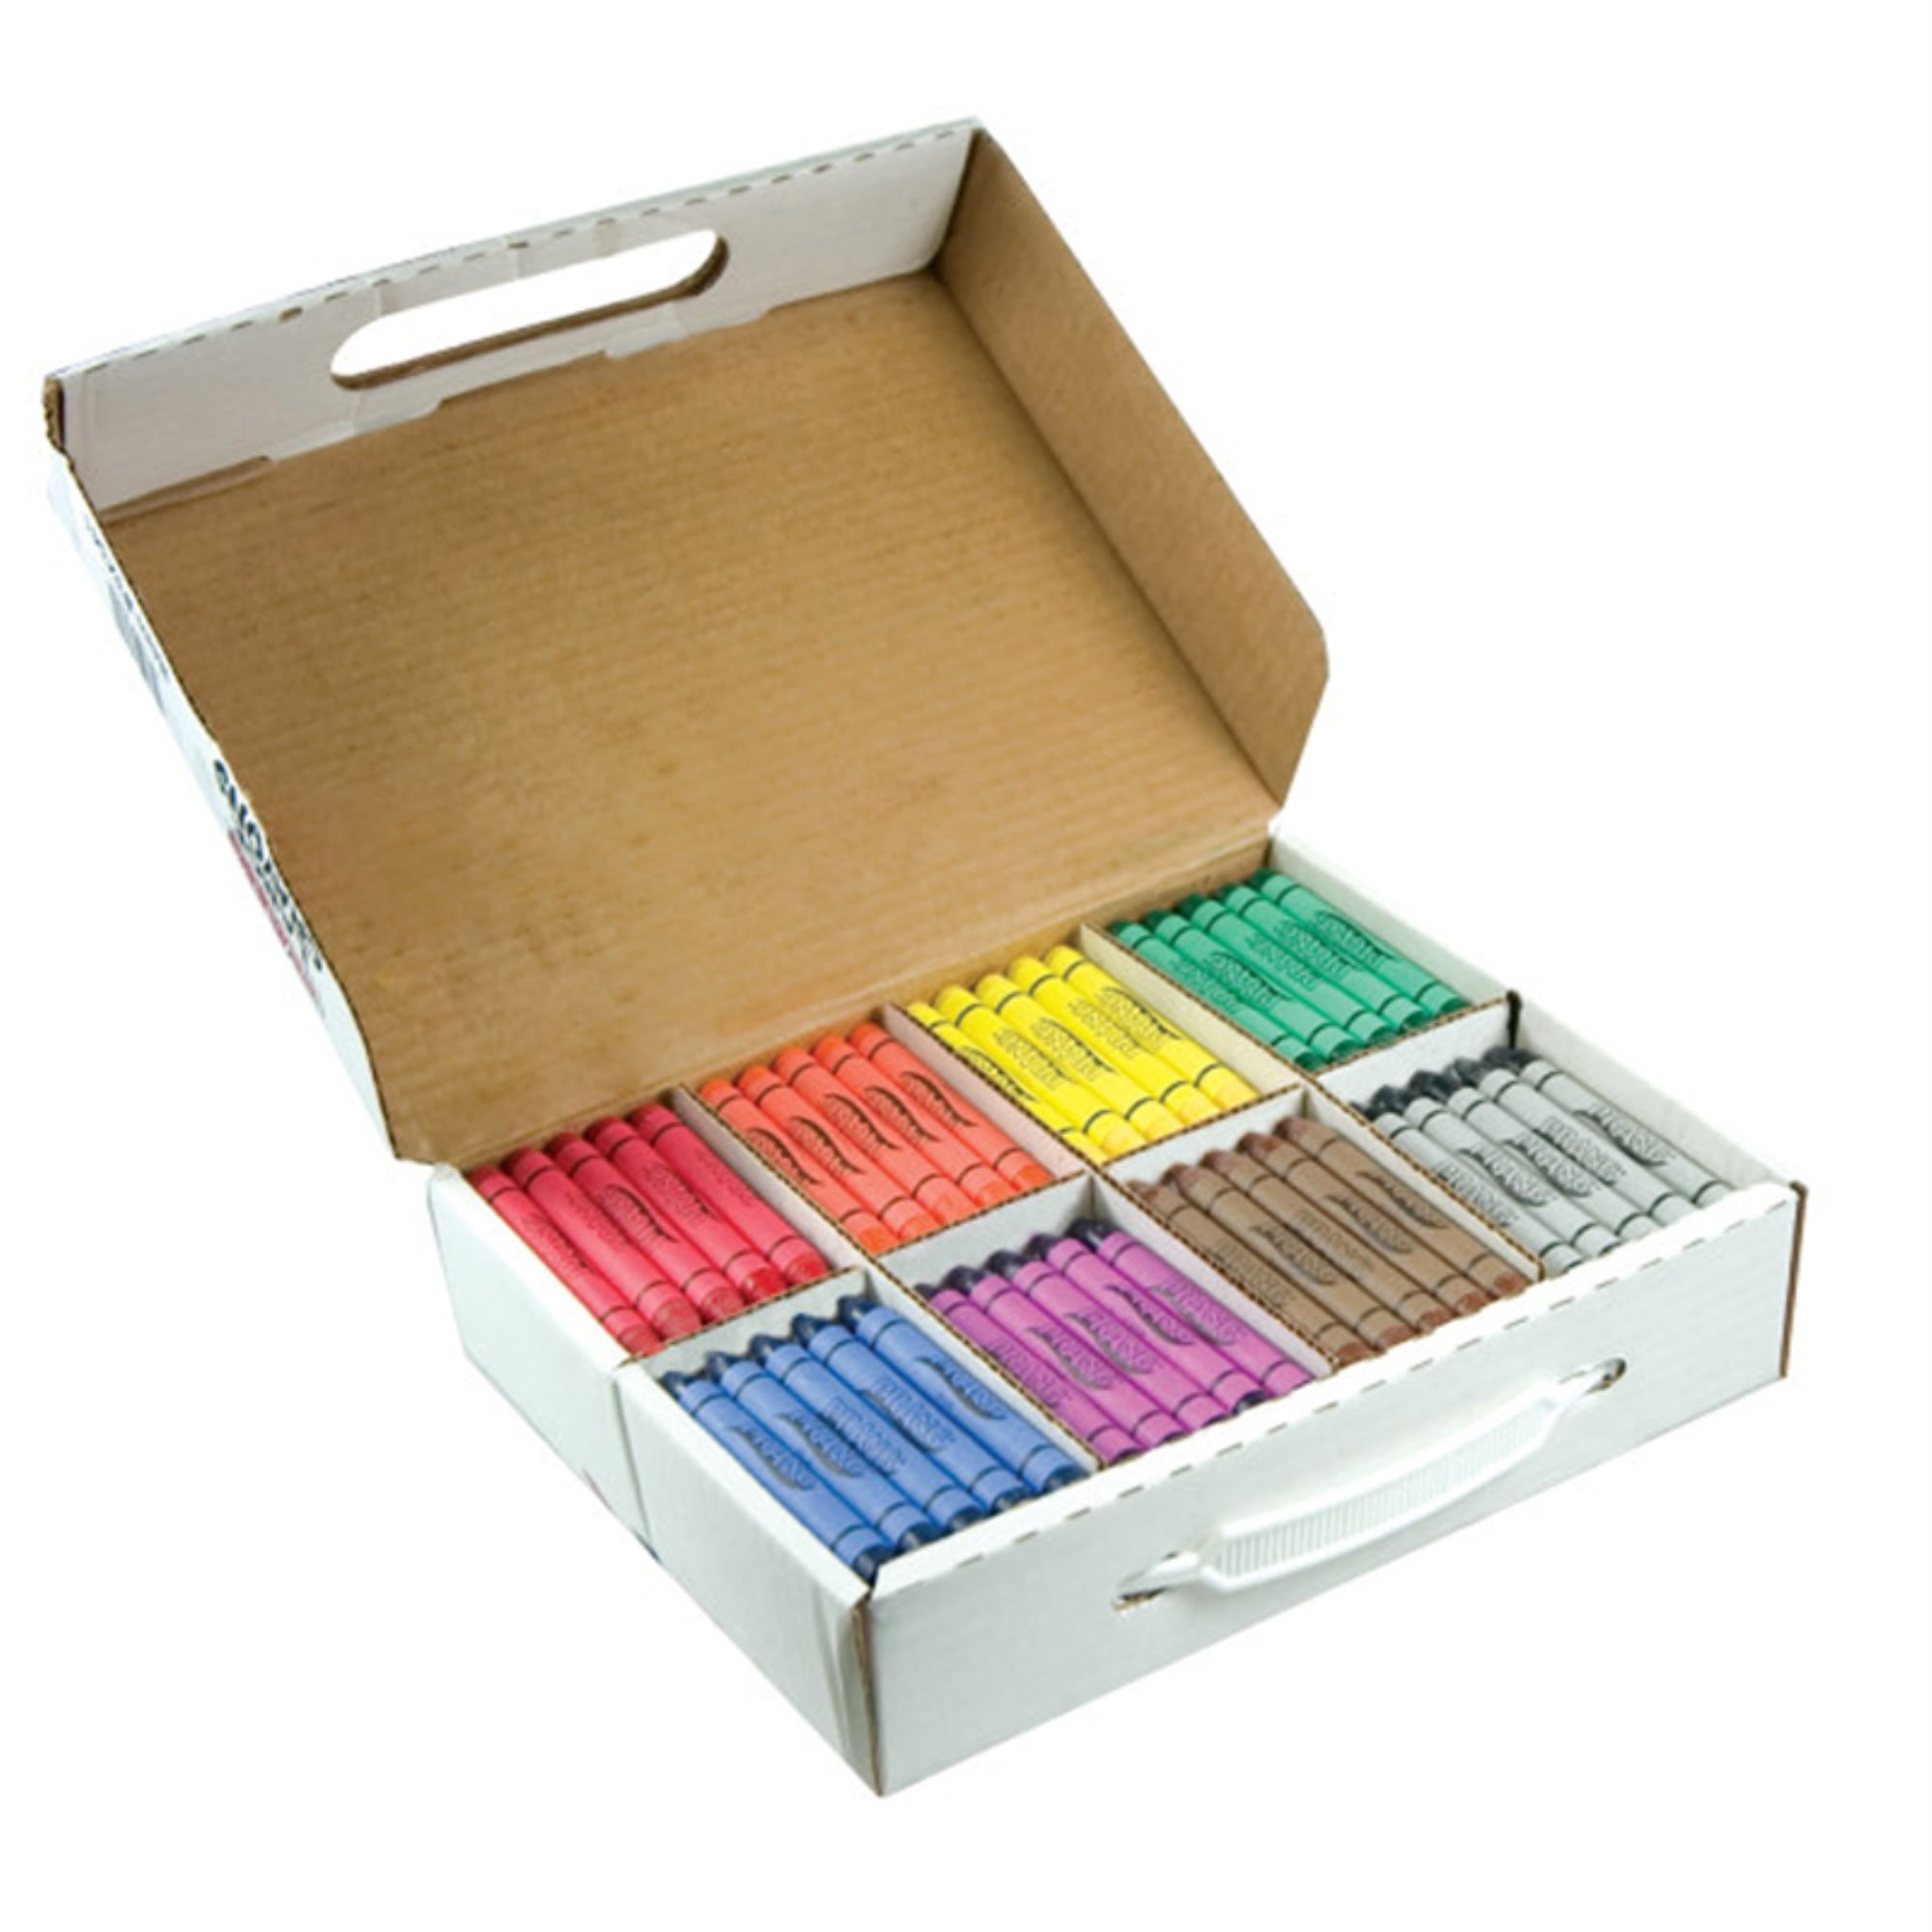 Sargent Art 200-Count Large Crayon Class Pack 55-3225 Best Buy Assortment 